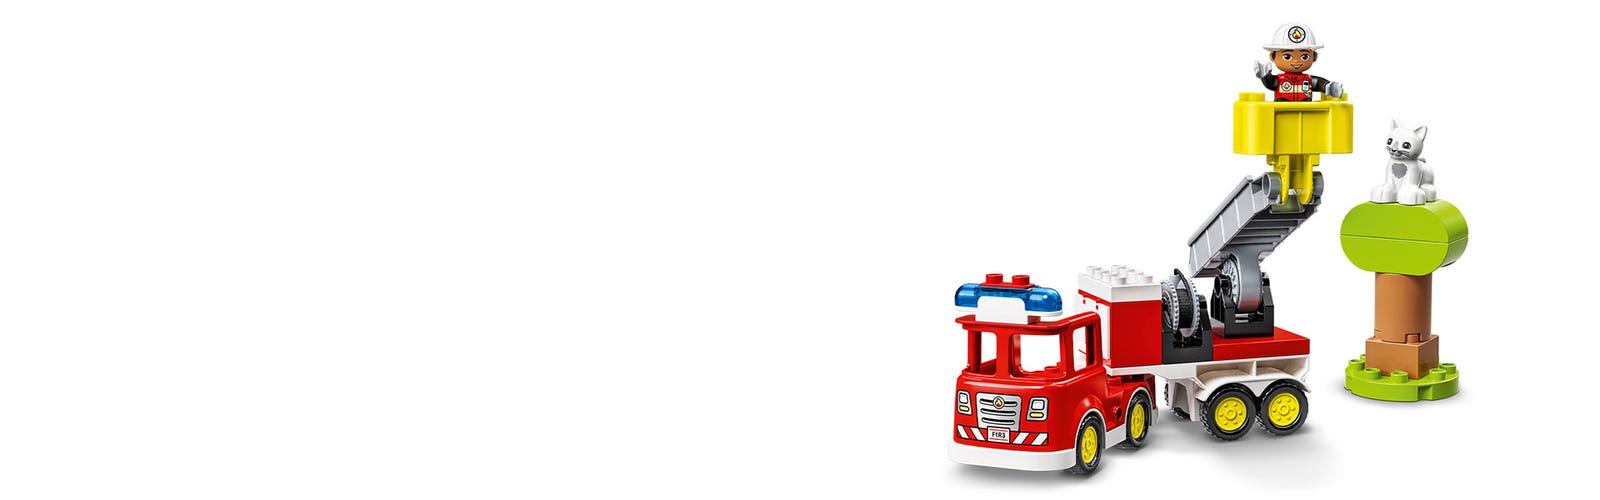 Feuerwehrauto 10969 | DUPLO® Shop | Offizieller LEGO® DE